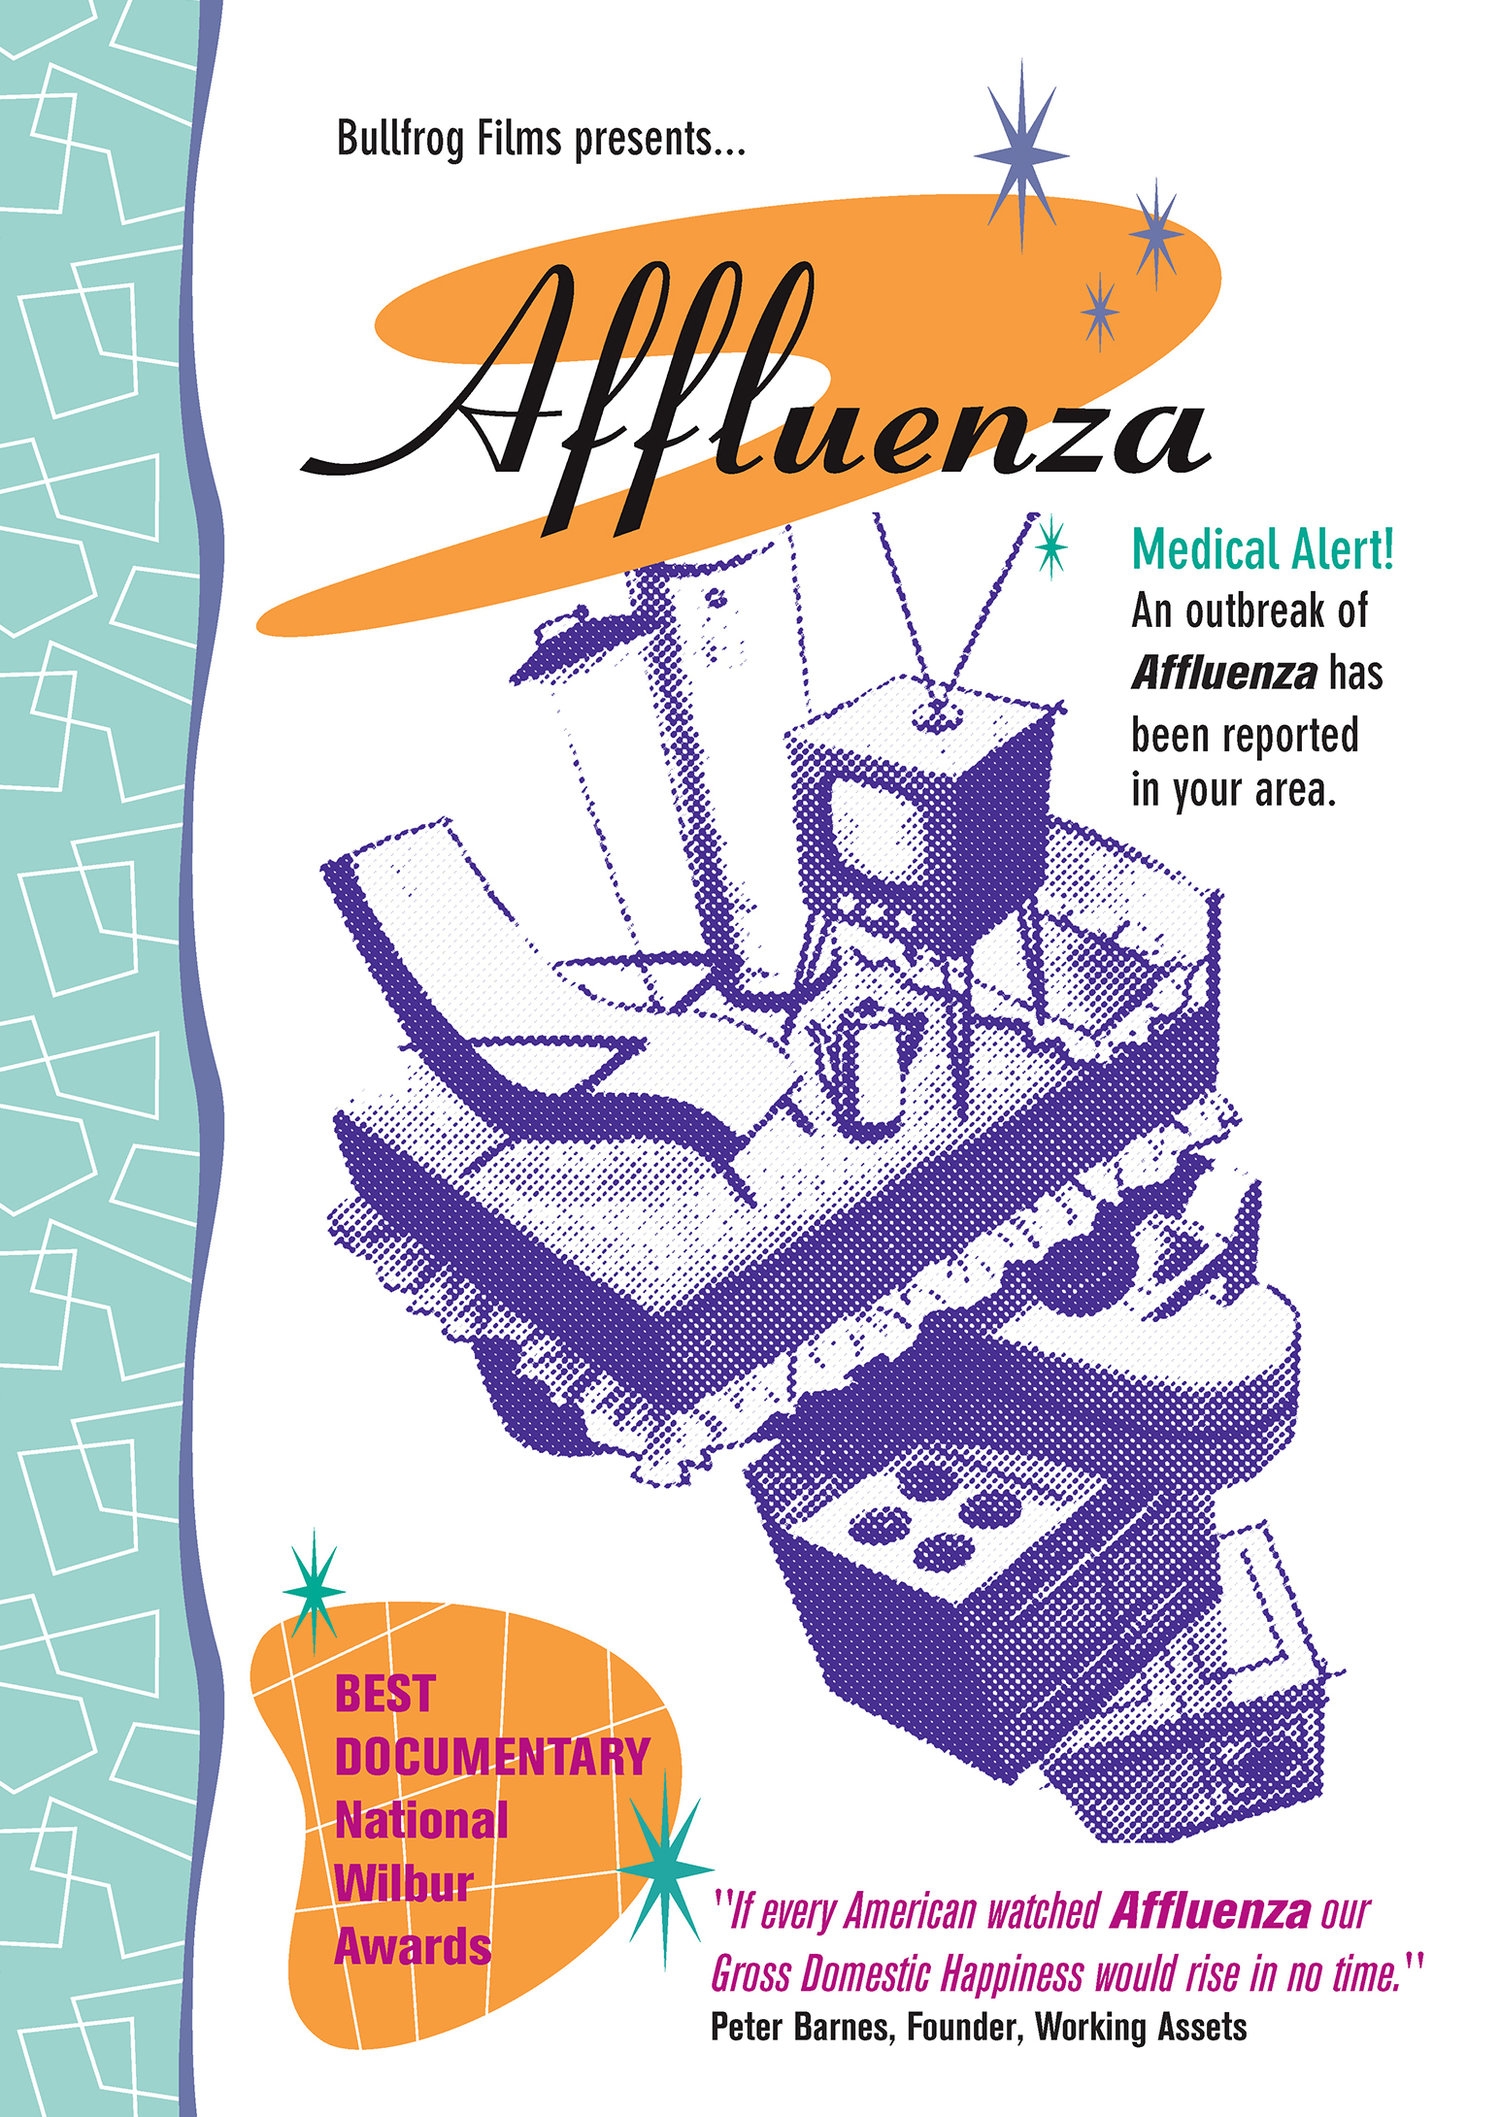 Affluenza (1997) starring Joe Dominguez on DVD on DVD